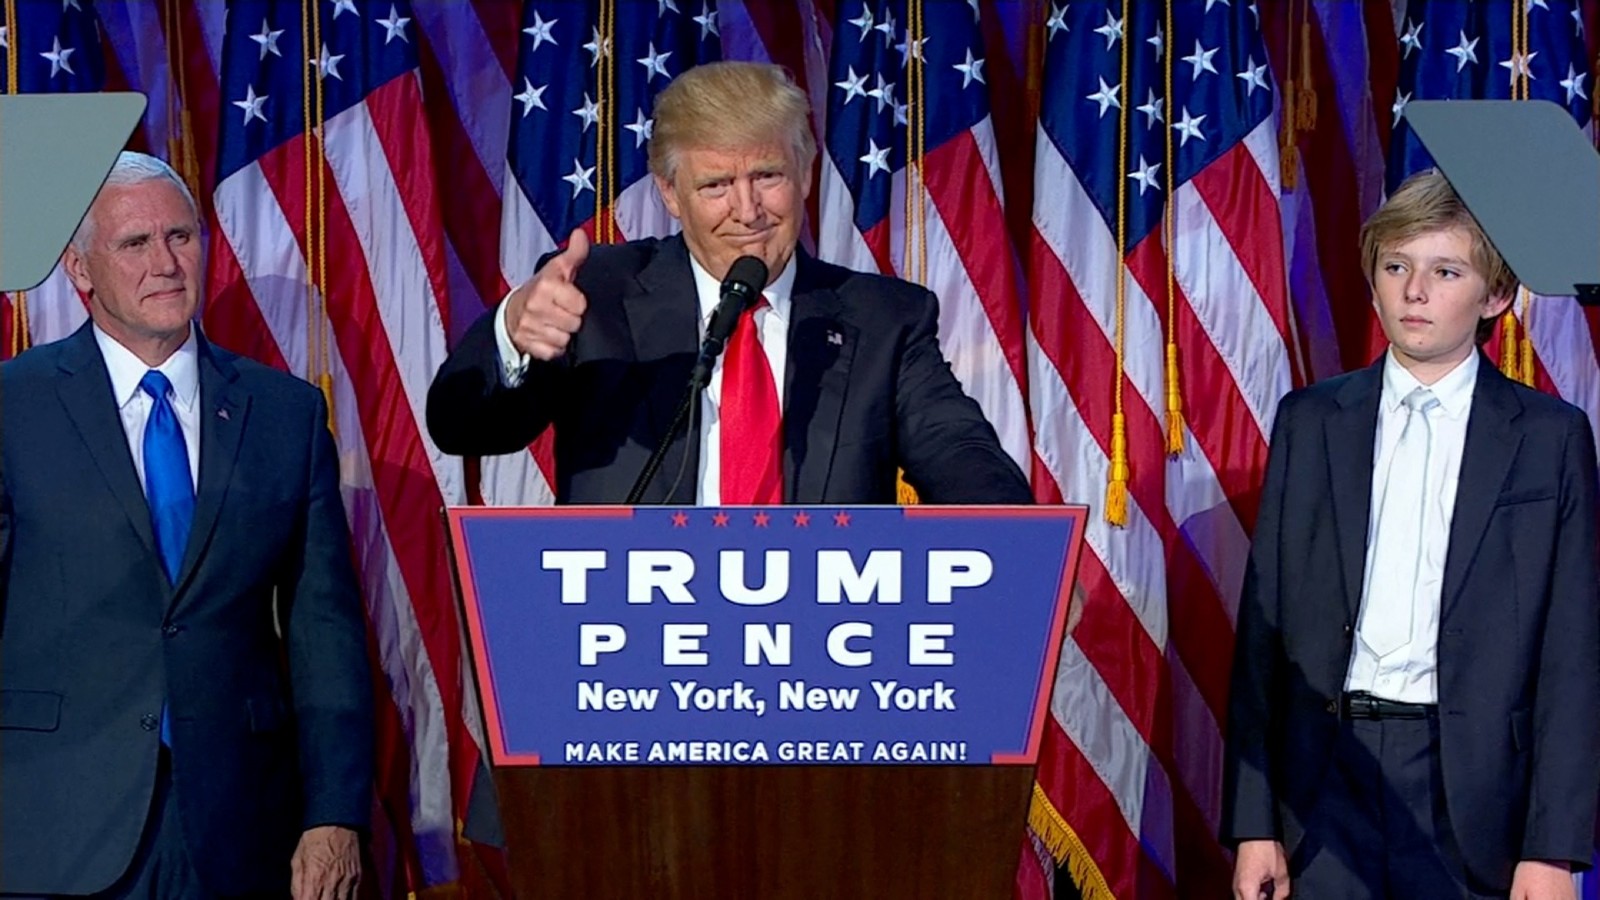 Donald Trump's victory speech (full text) - CNNPolitics